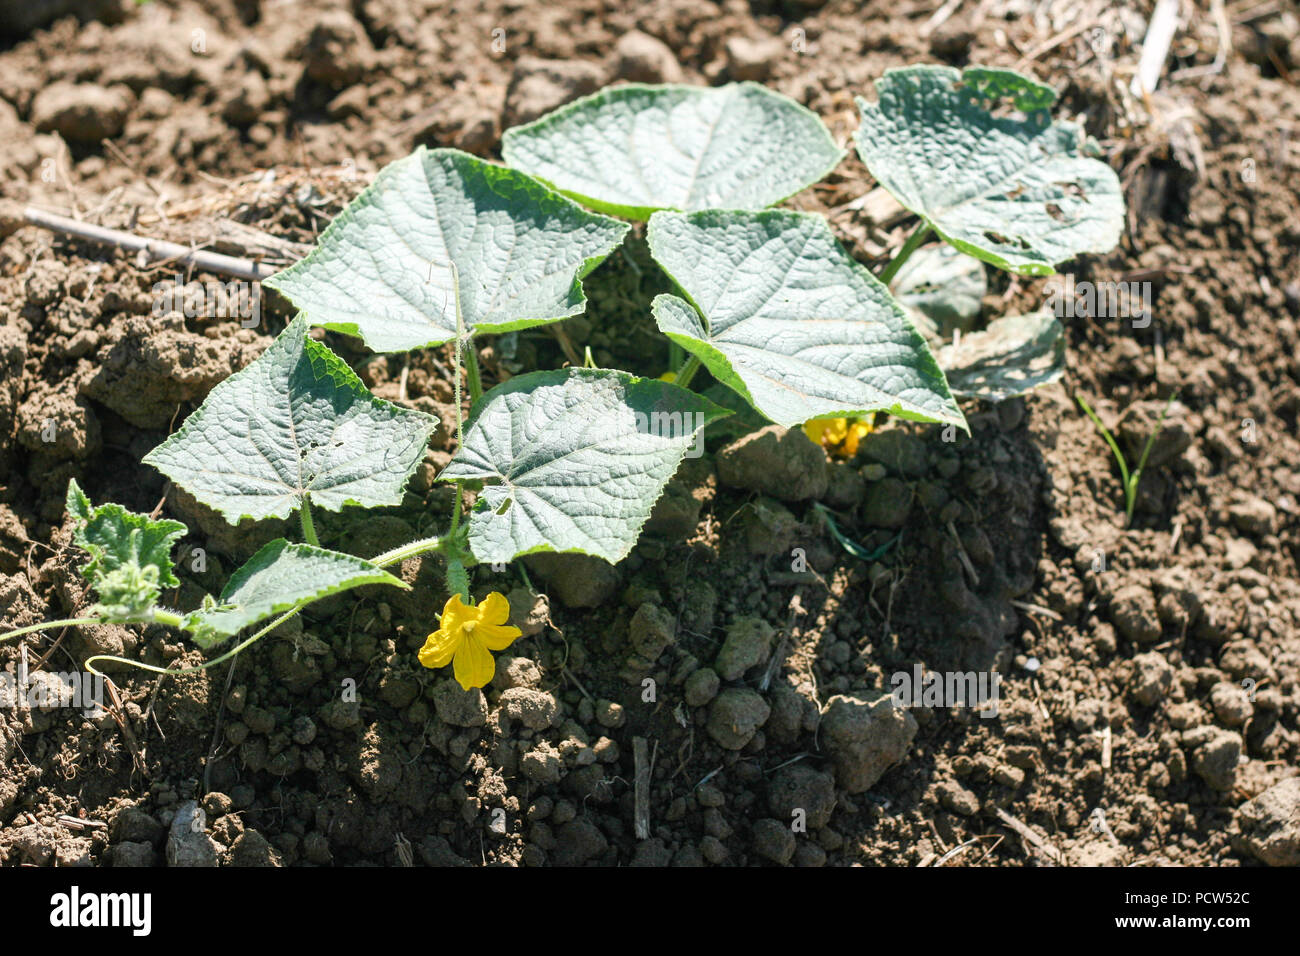 Cucumber Plants in Field Stock Photo